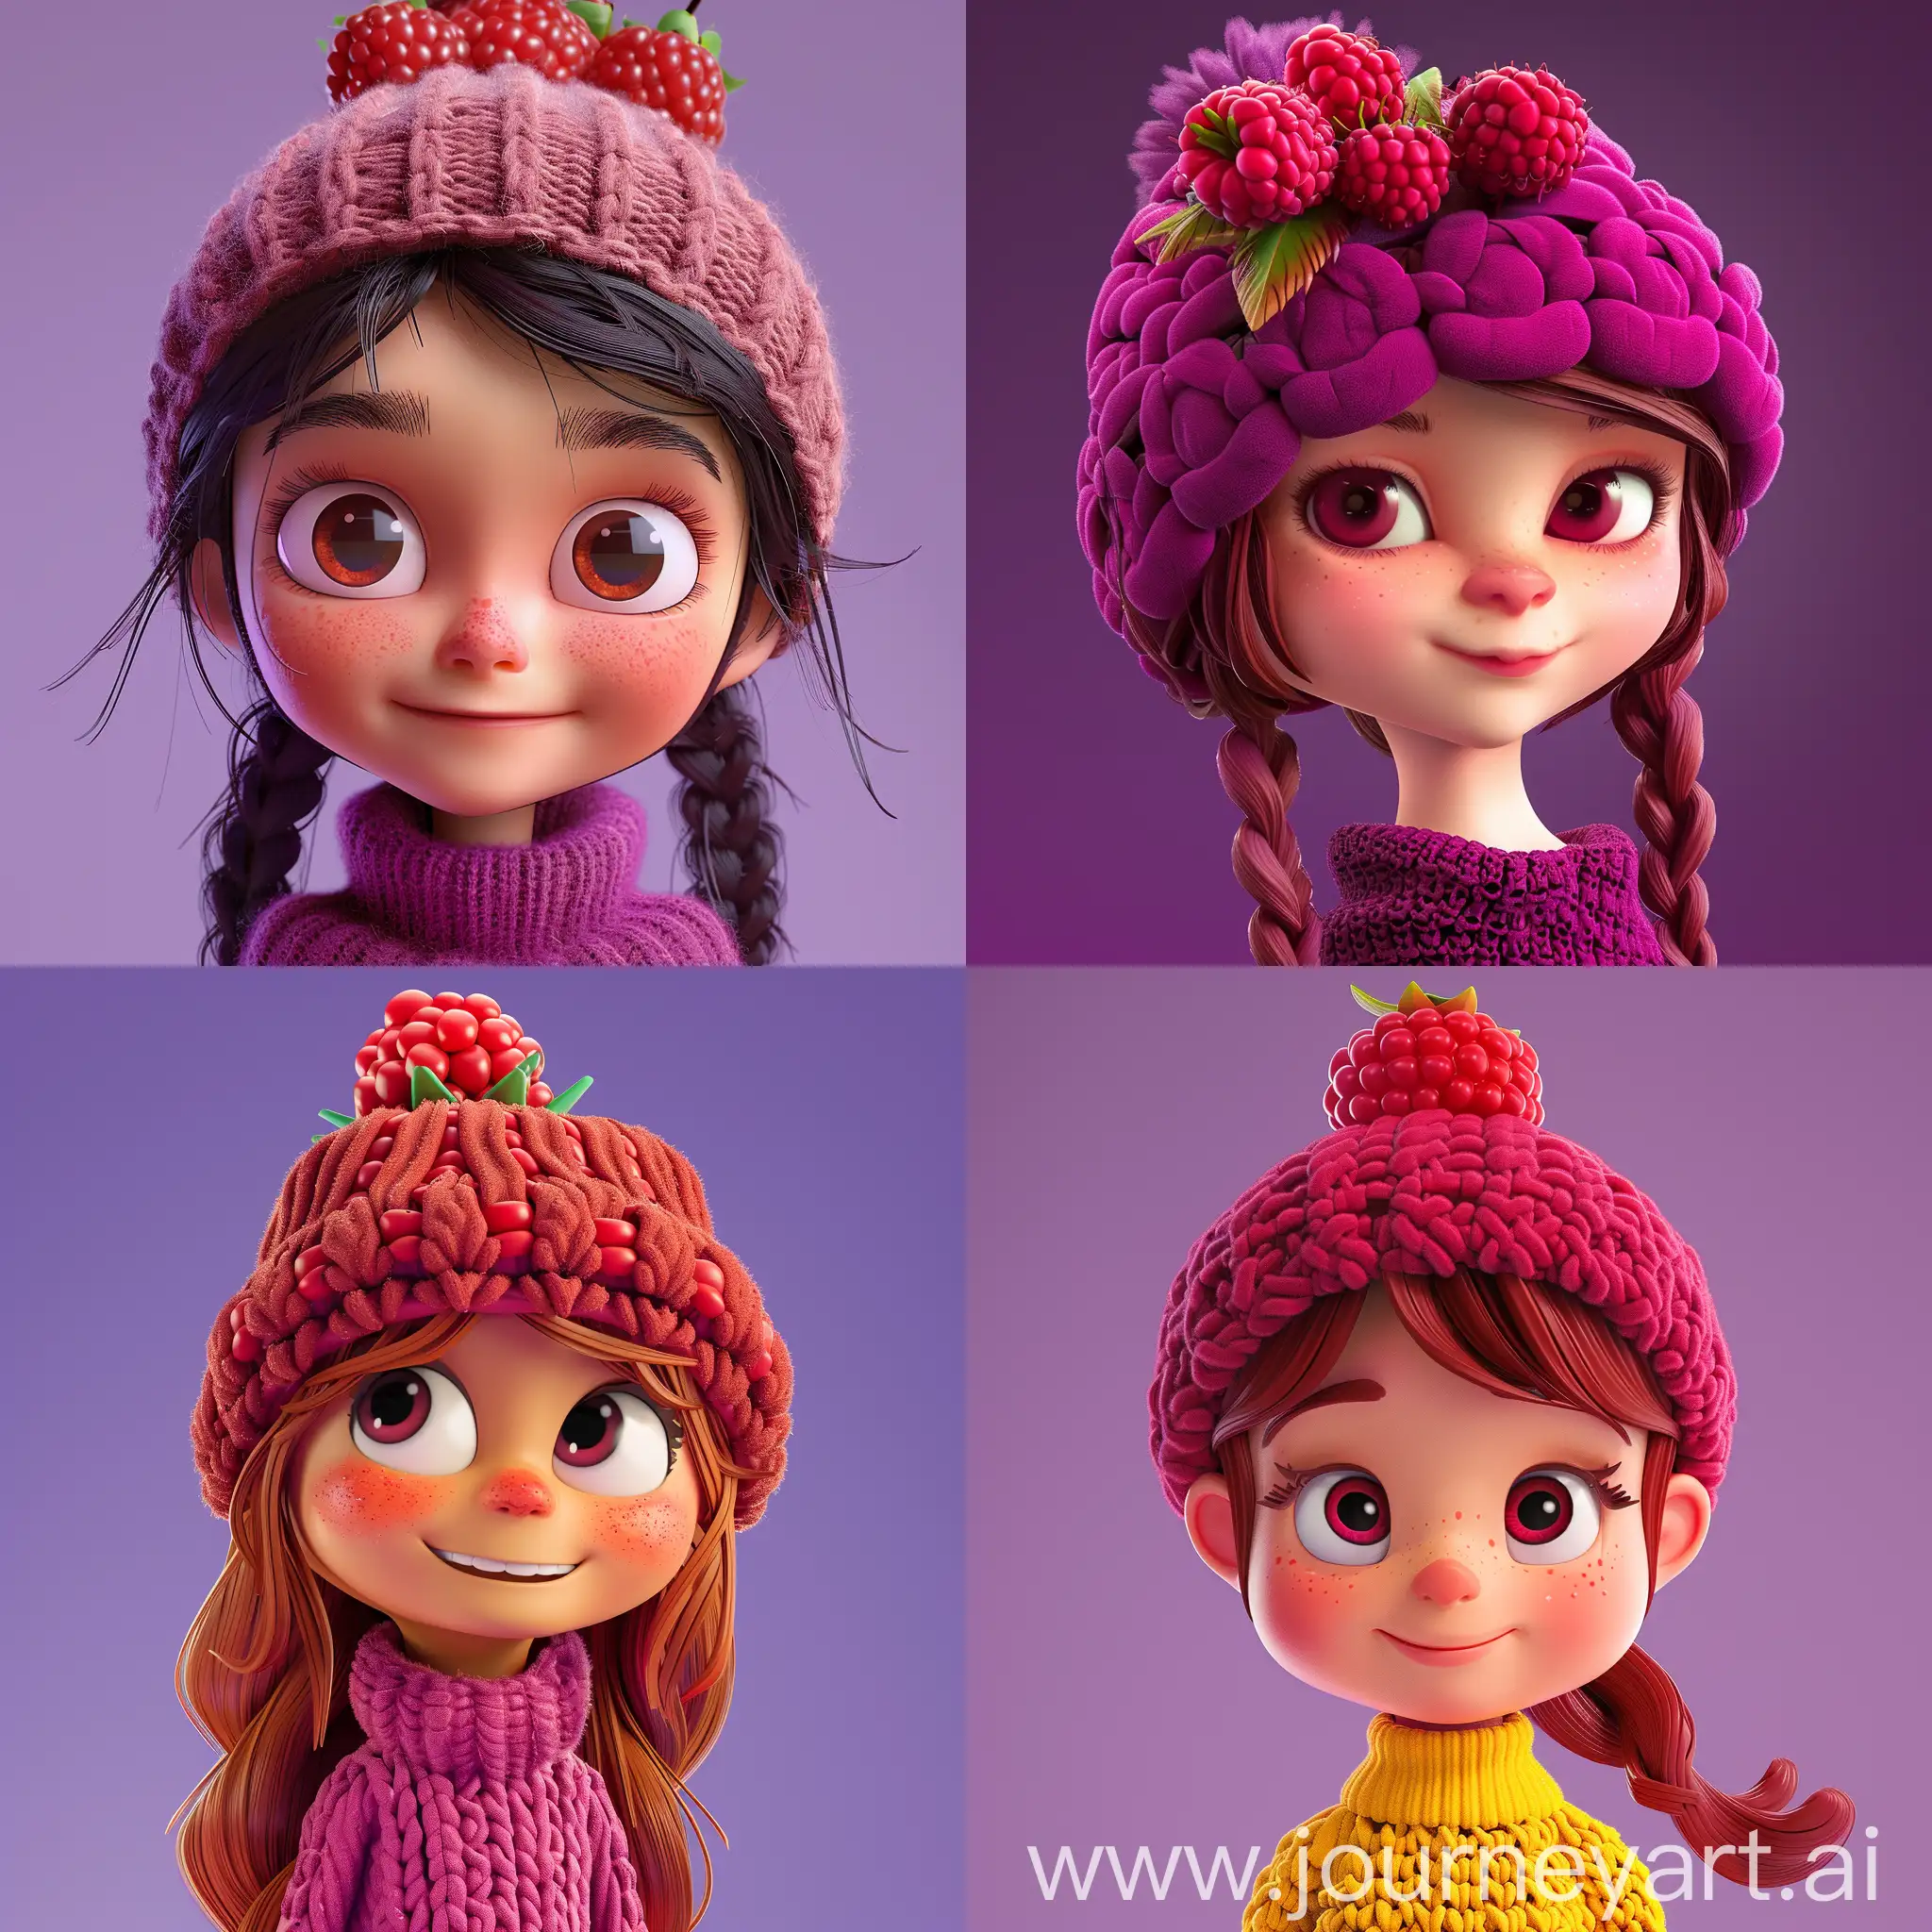 Generate an image, a cute 3d cartoon girl wearing a raspberry hat, purple background